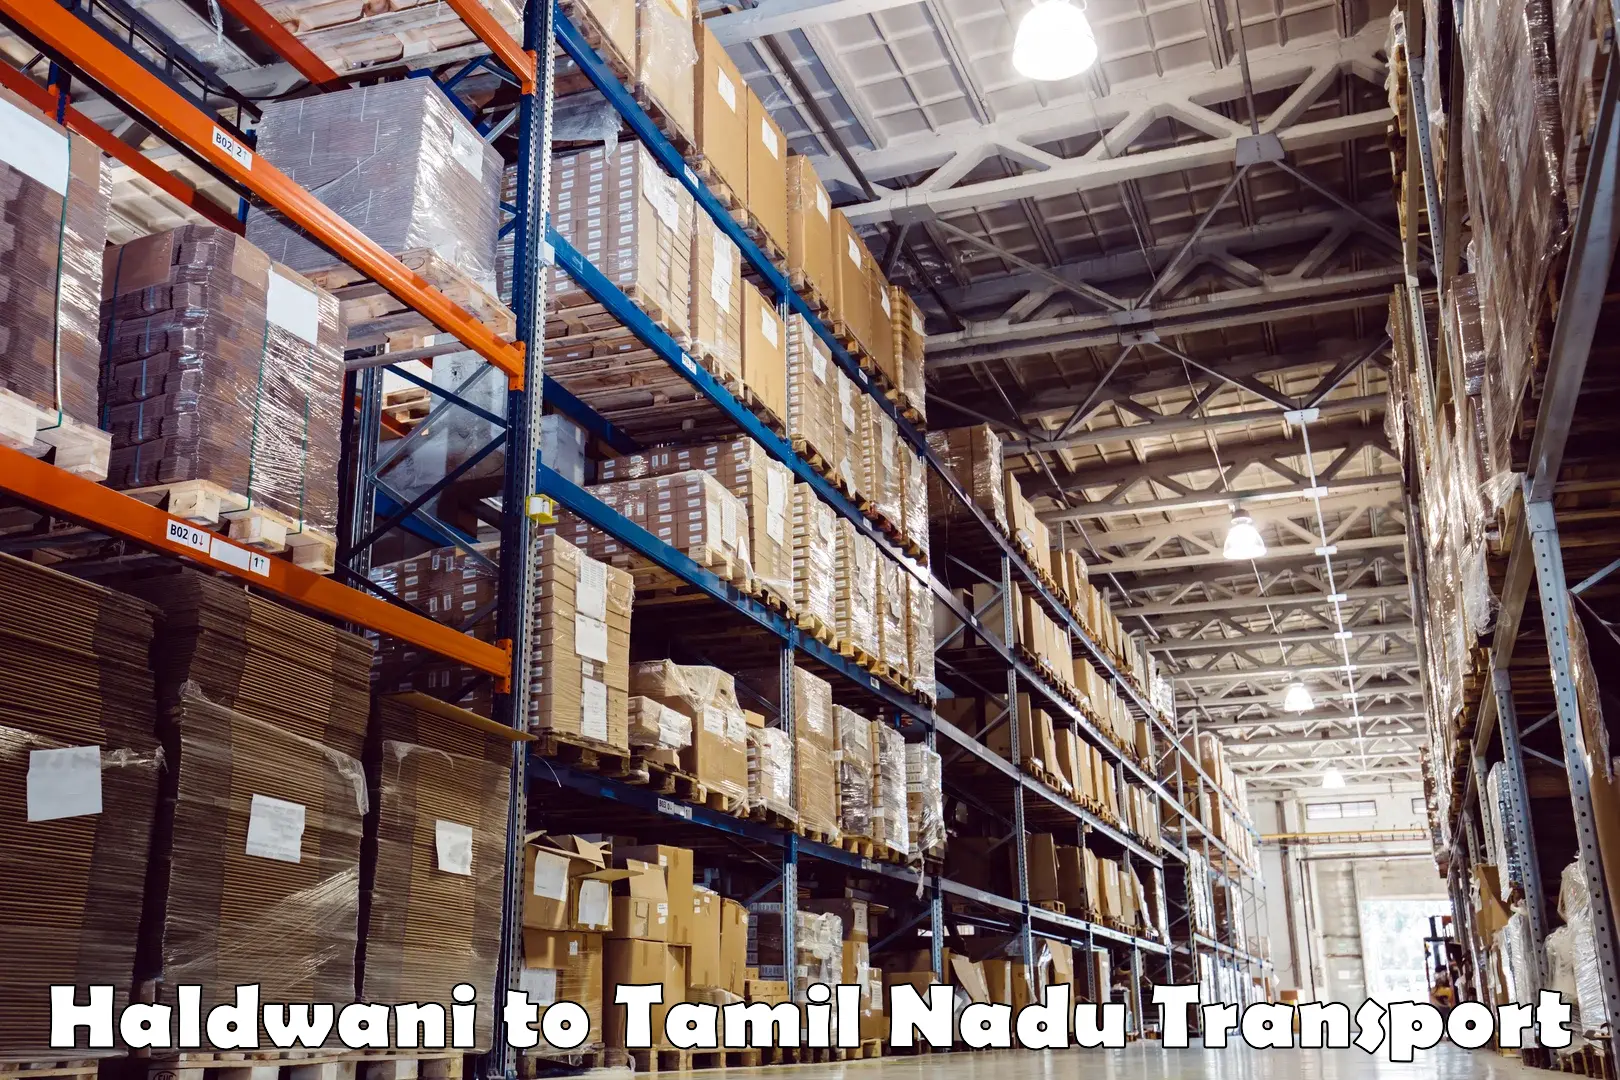 Bike shipping service Haldwani to Tamil Nadu